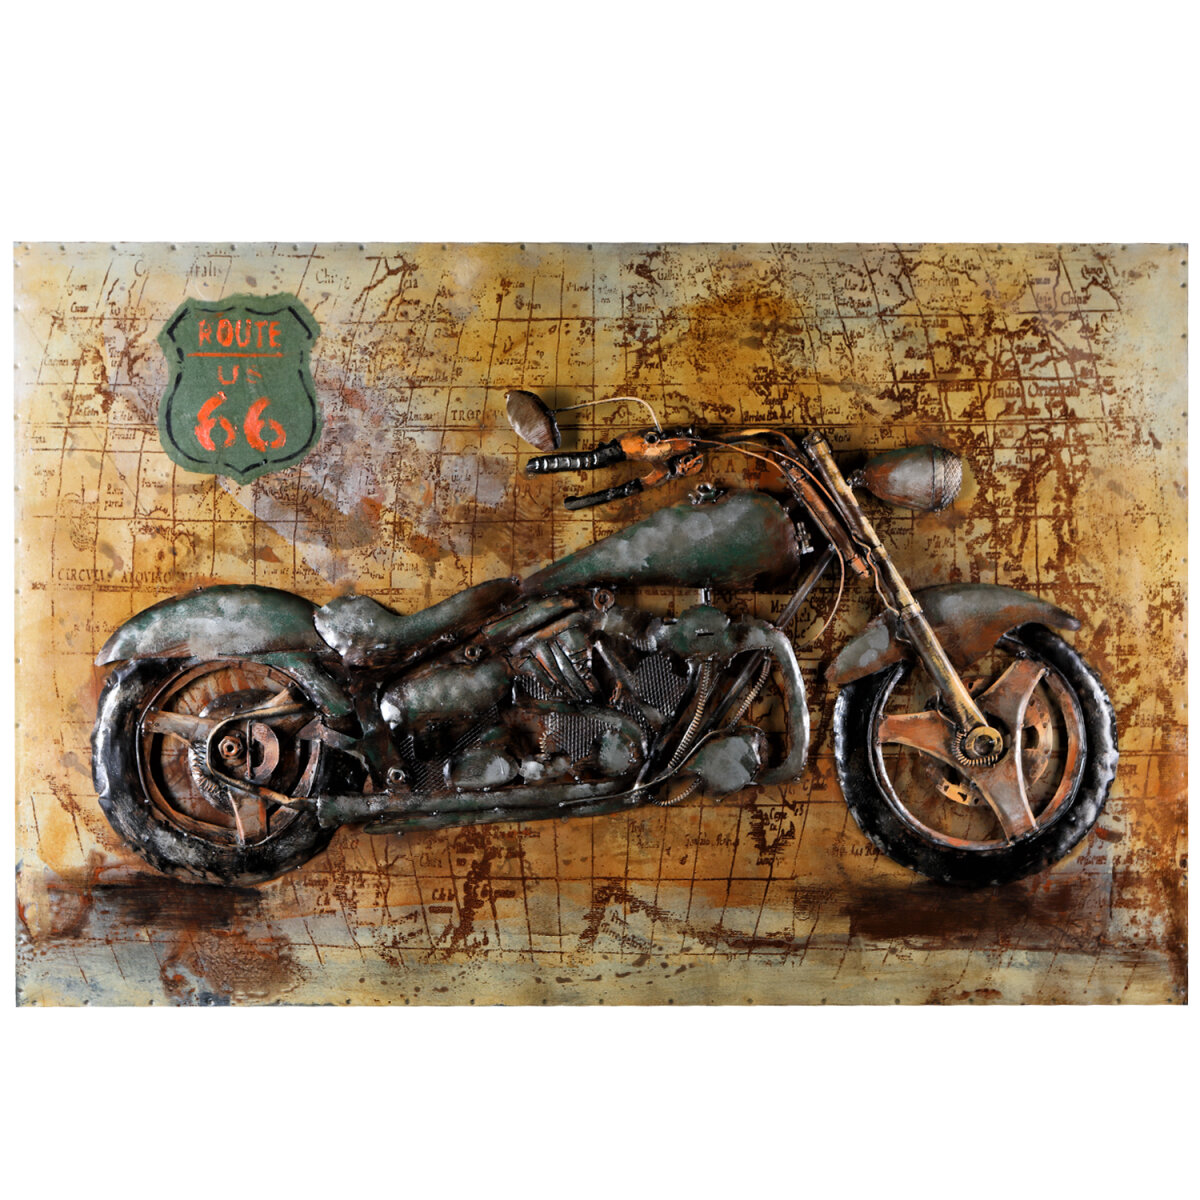 Wandbild Bild 219,99 Metallbild 66 Metall Motorcycle Unikat Relief € 3D Handma,